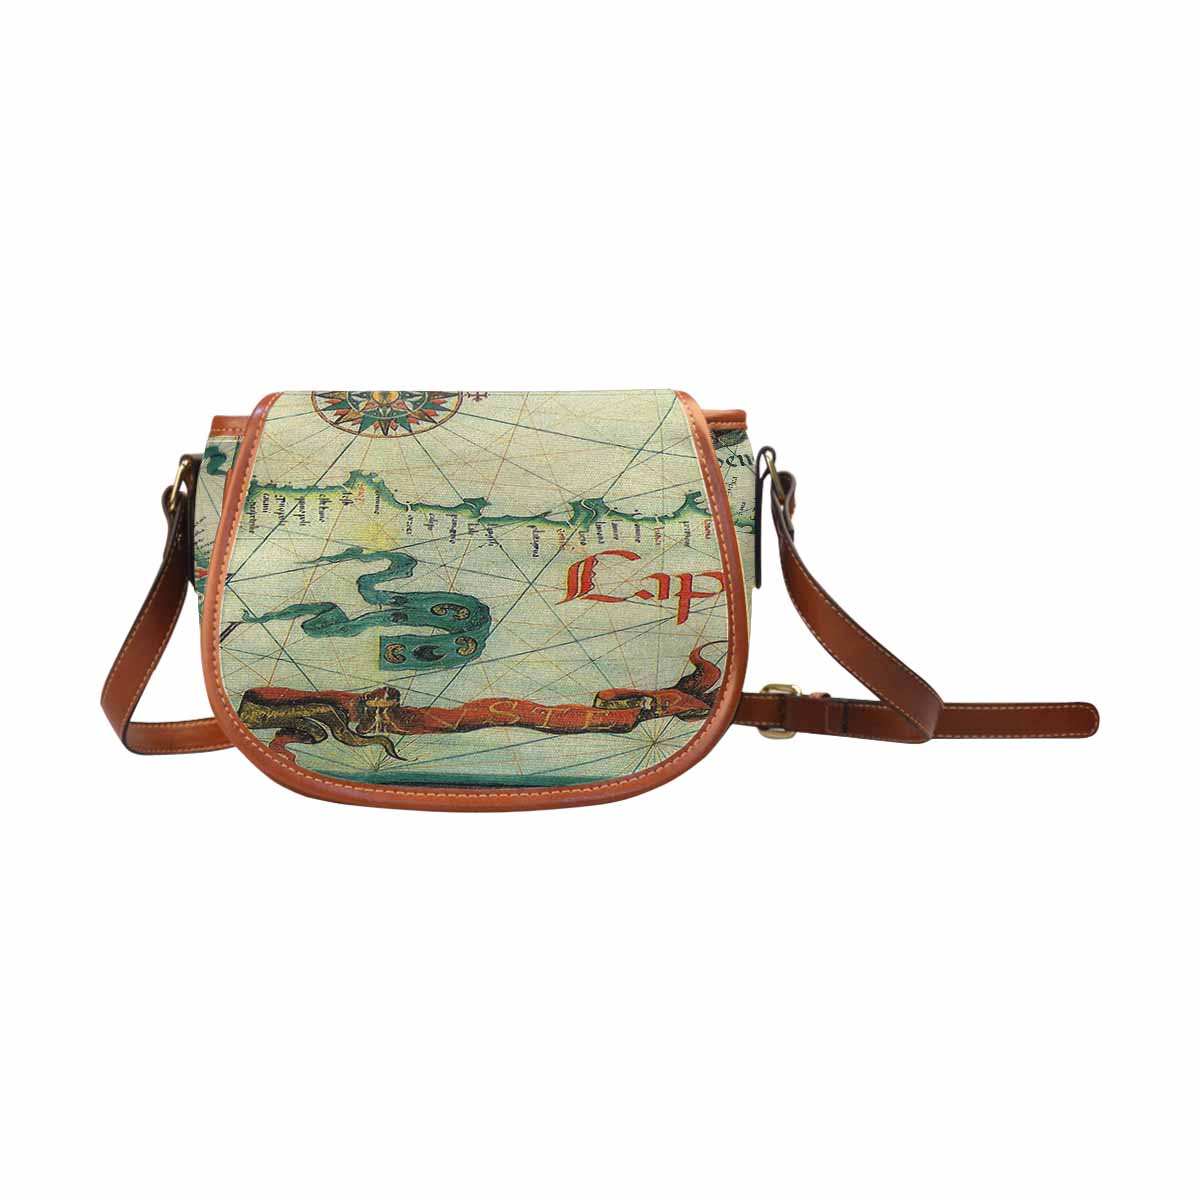 Antique Map design Handbag, saddle bag, Design 33